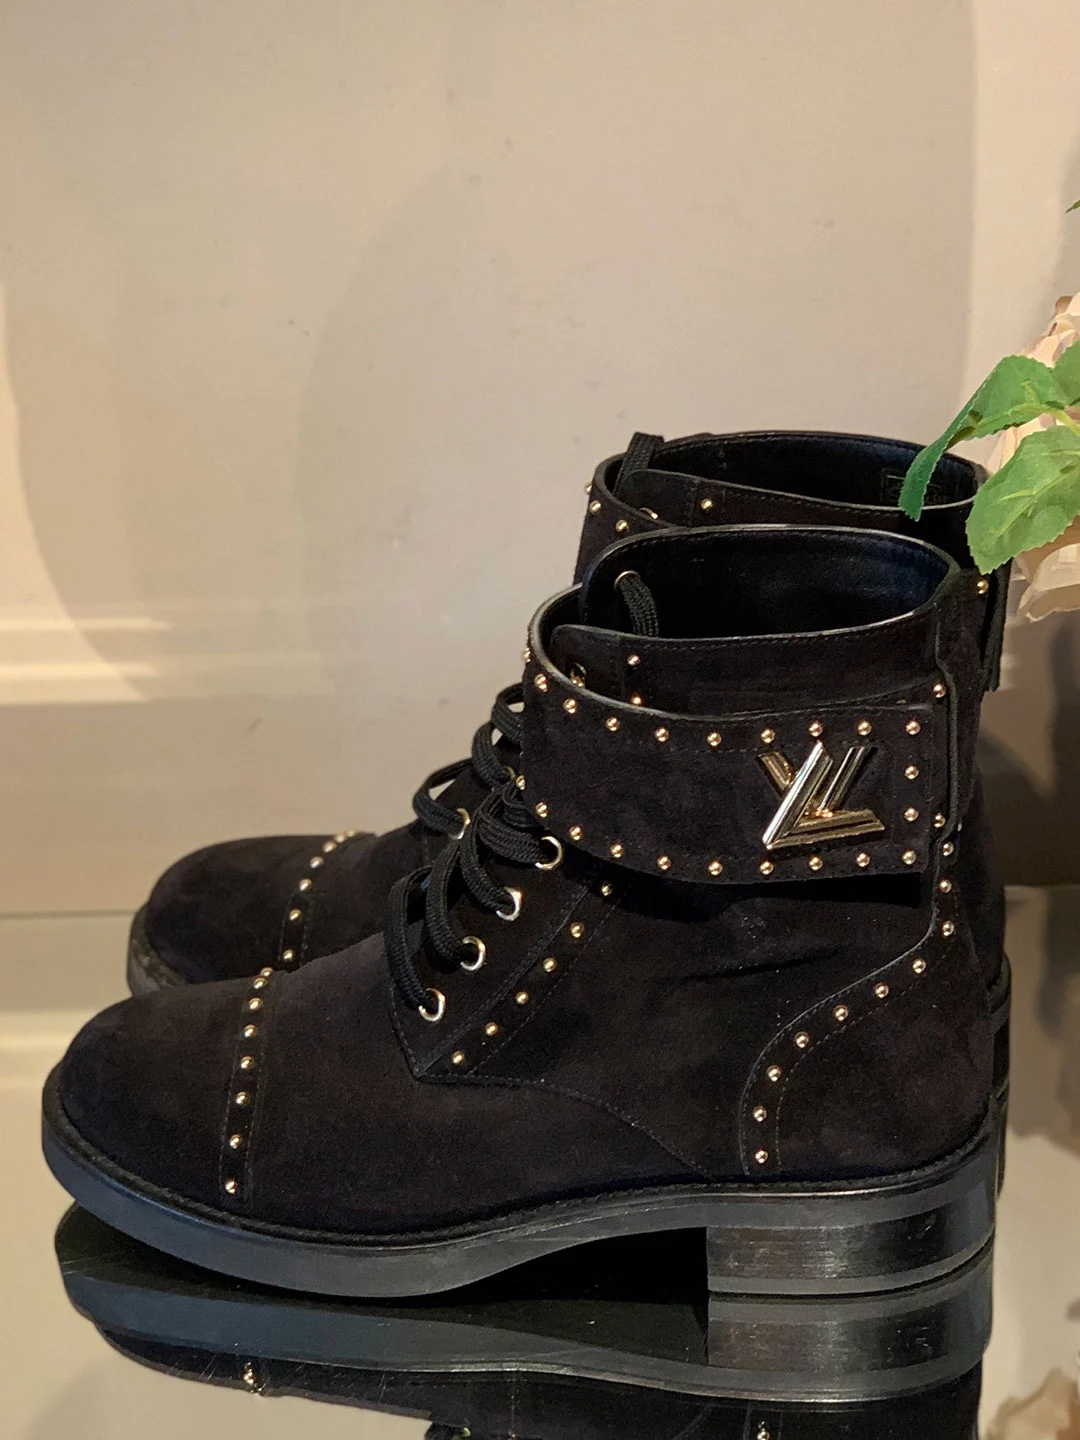 Wonderland leather lace up boots Louis Vuitton Black size 39 IT in